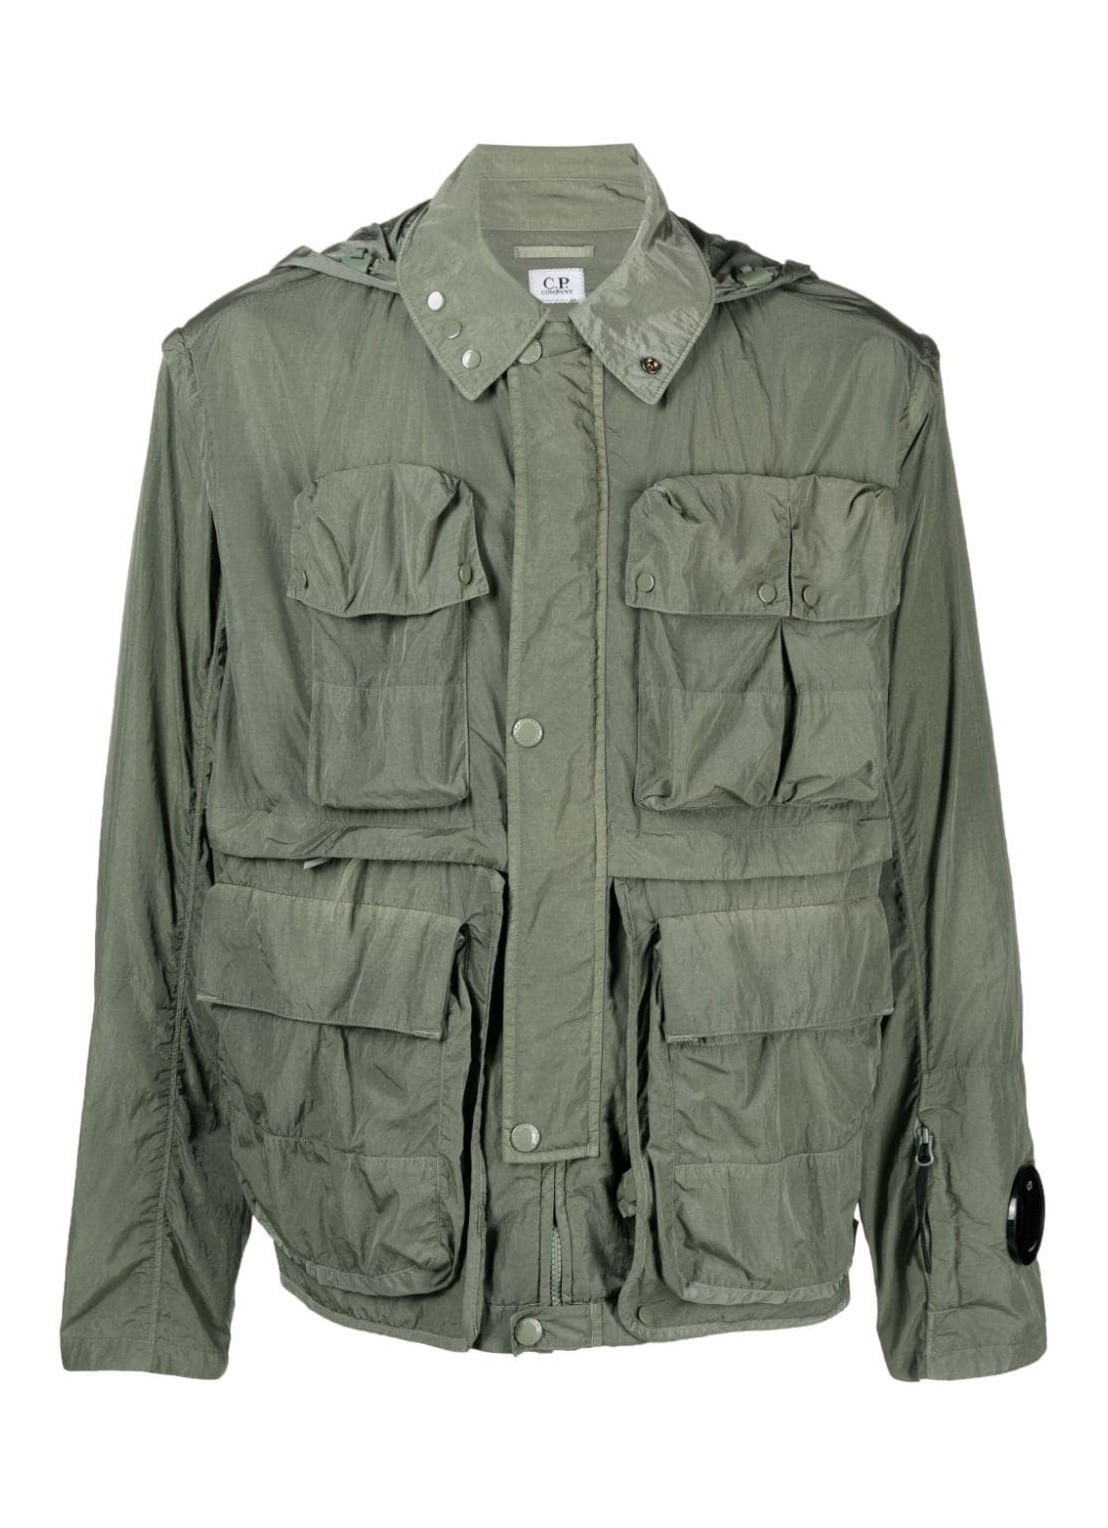 Outerwear c.p.company outerwear manchrome-r goggle utility jacket - 16cmow011a005904g 627 talla 48
 